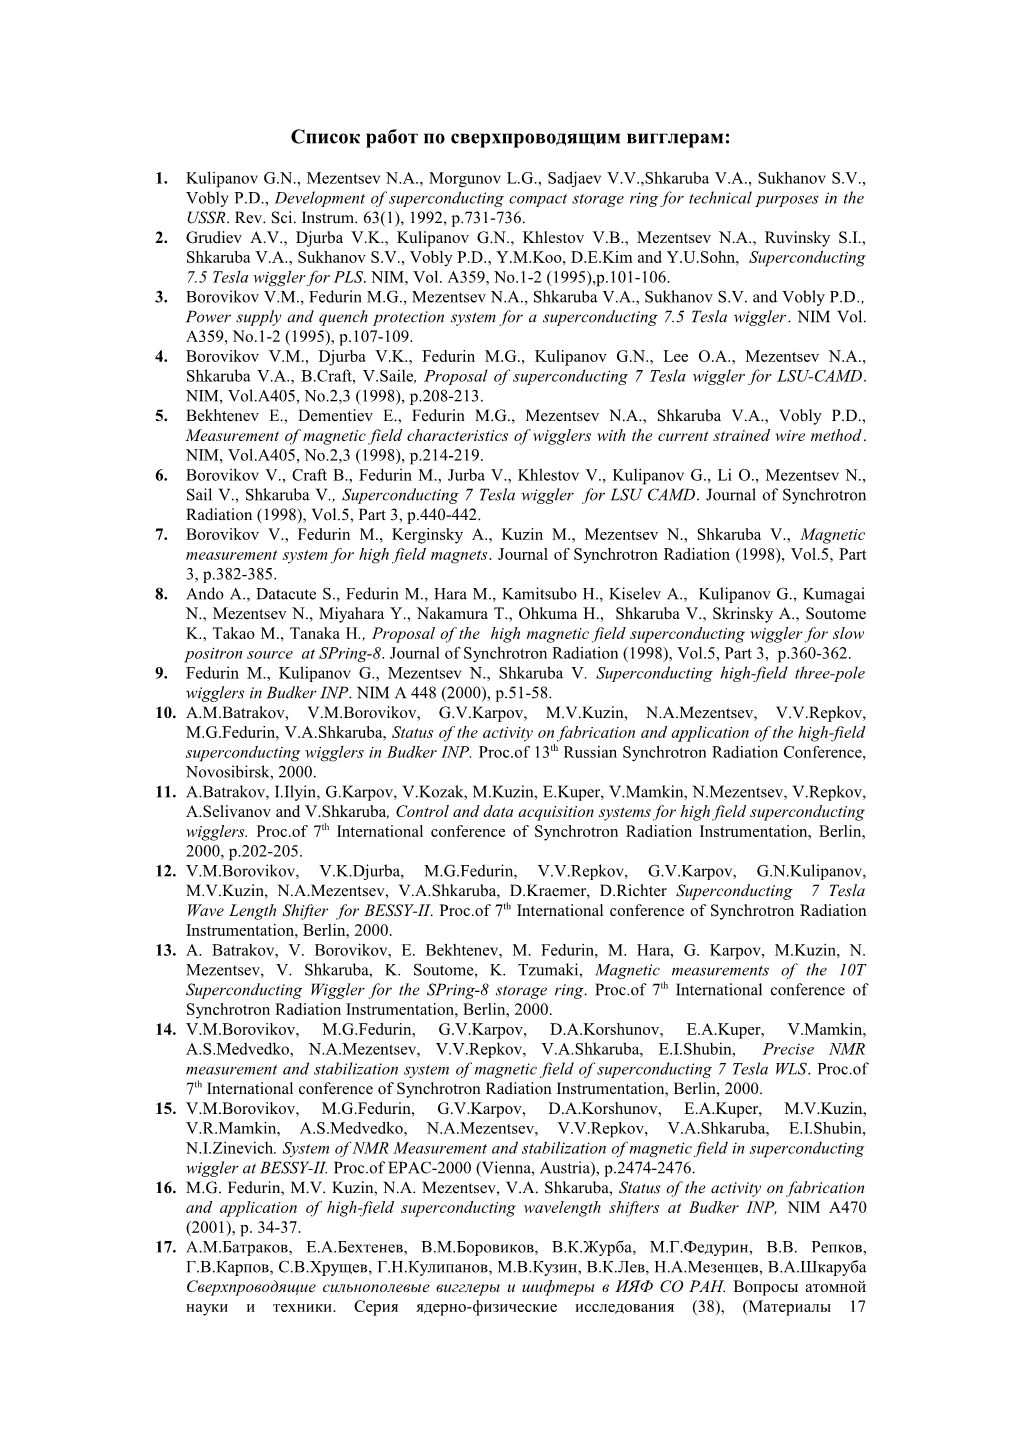 1.Kulipanov G.N., Mezentsev N.A., Morgunov L.G., Sadjaev V.V.,Shkaruba V.A., Sukhanov S.V